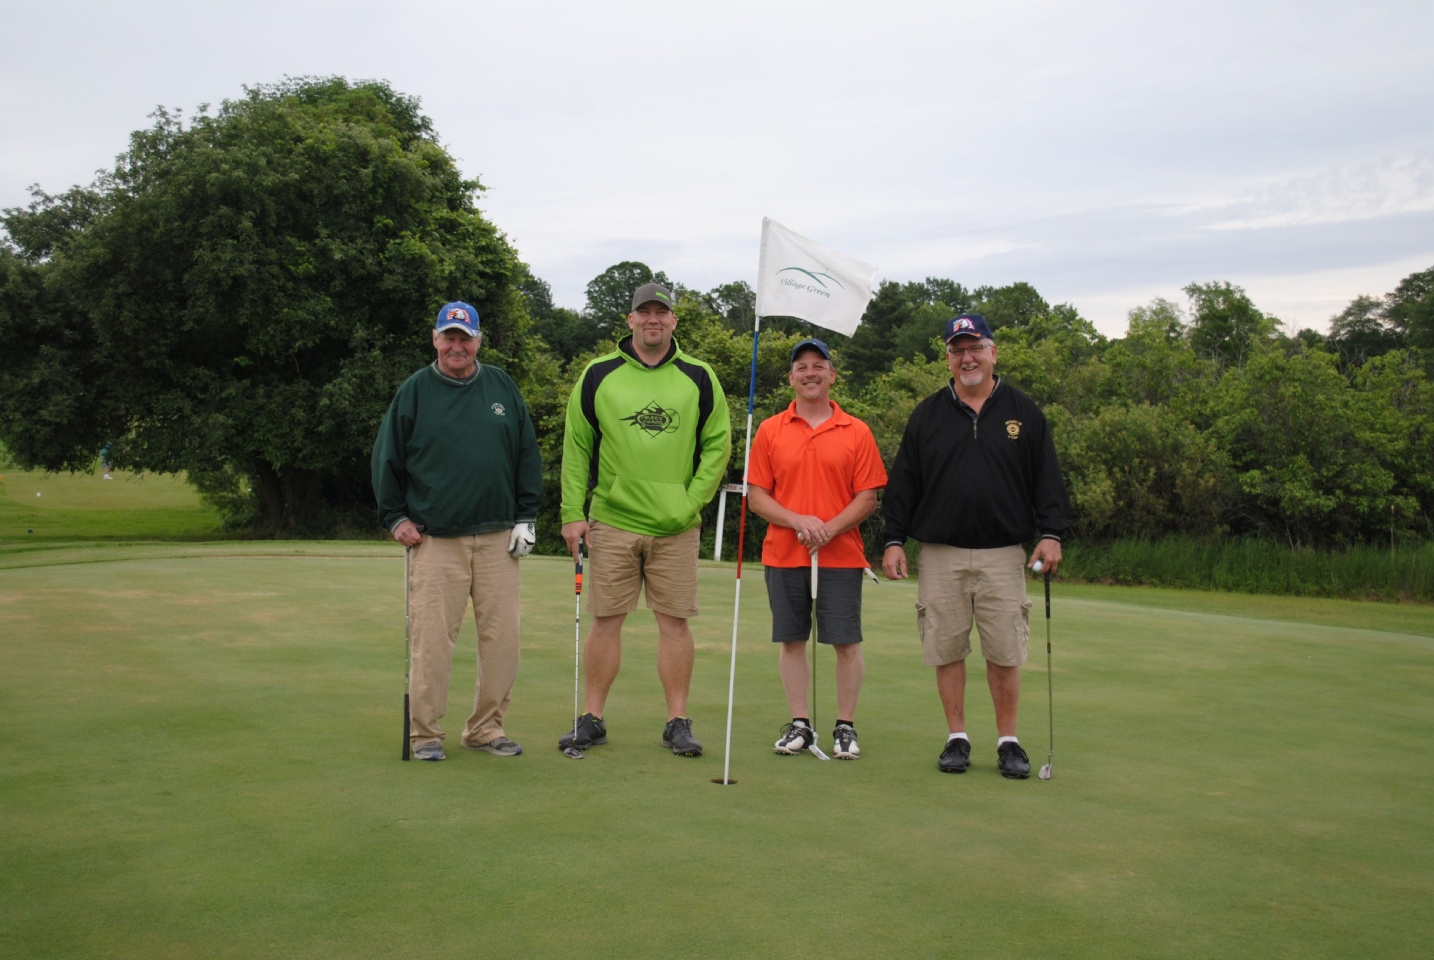 Village Green Golf Course, Newaygo, MI

Jim O’Neil
Joe Arens
Marsh Ryman
Todd McCullough
